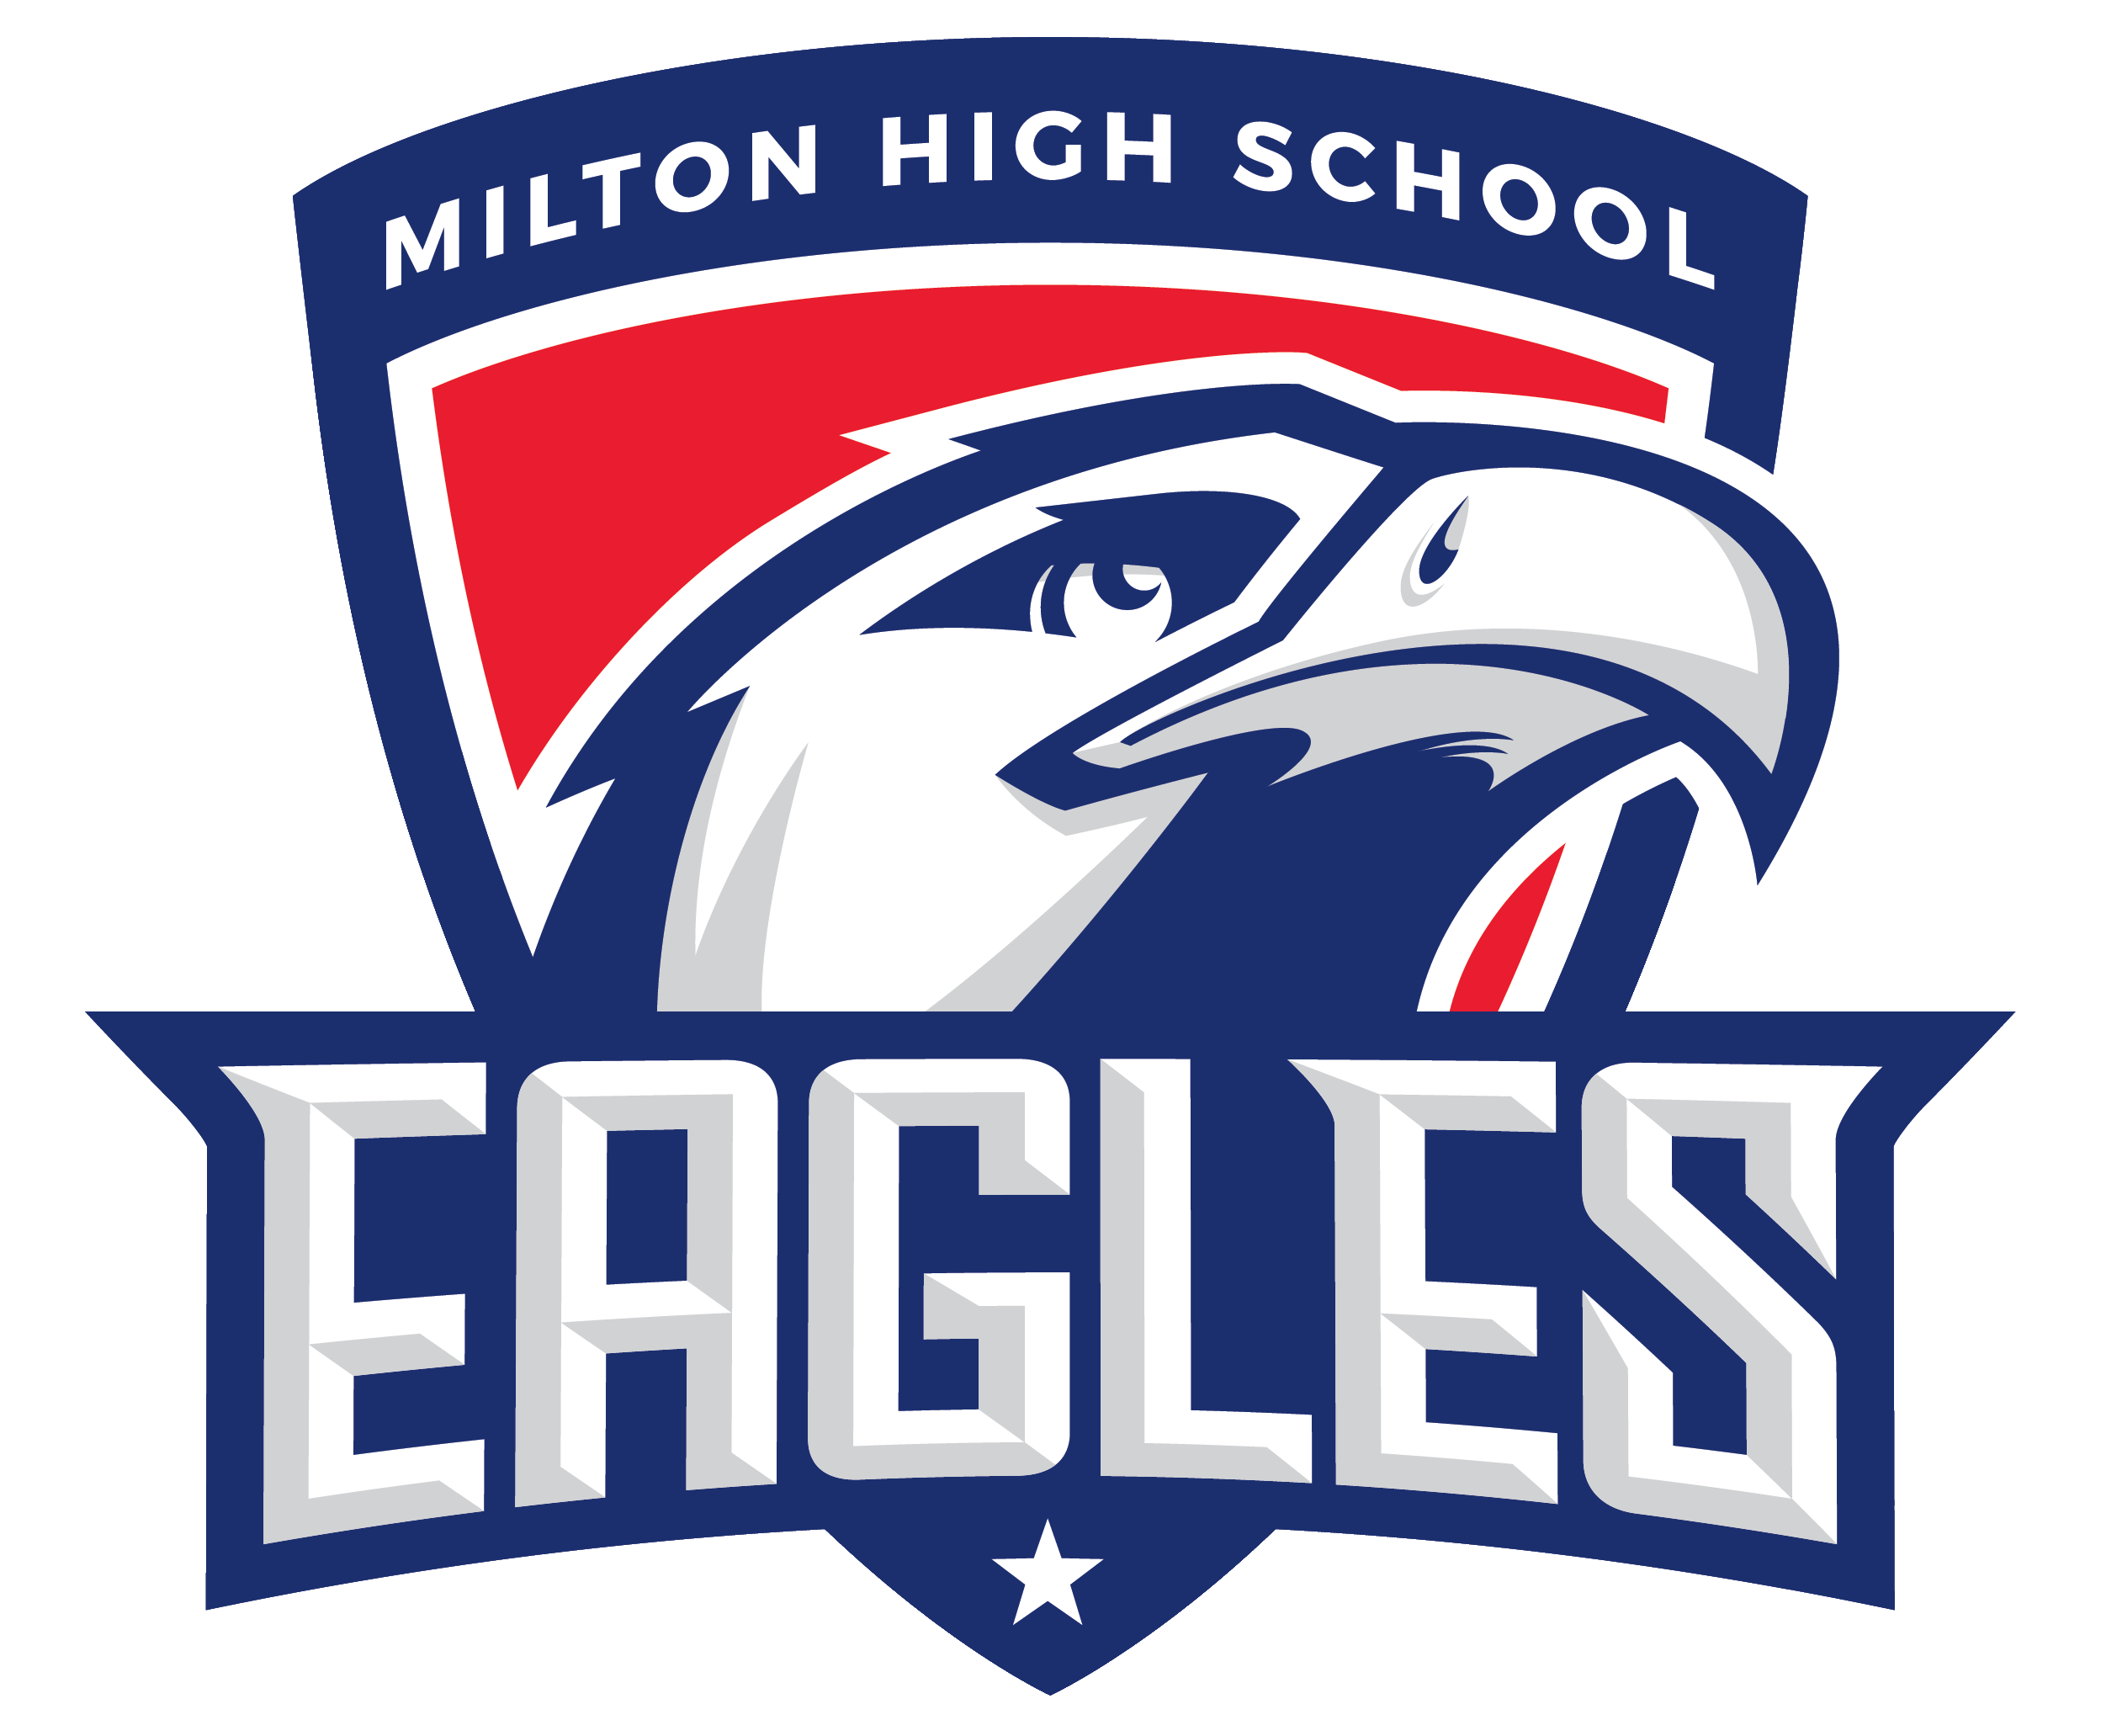 Millton Logo - Milton High School